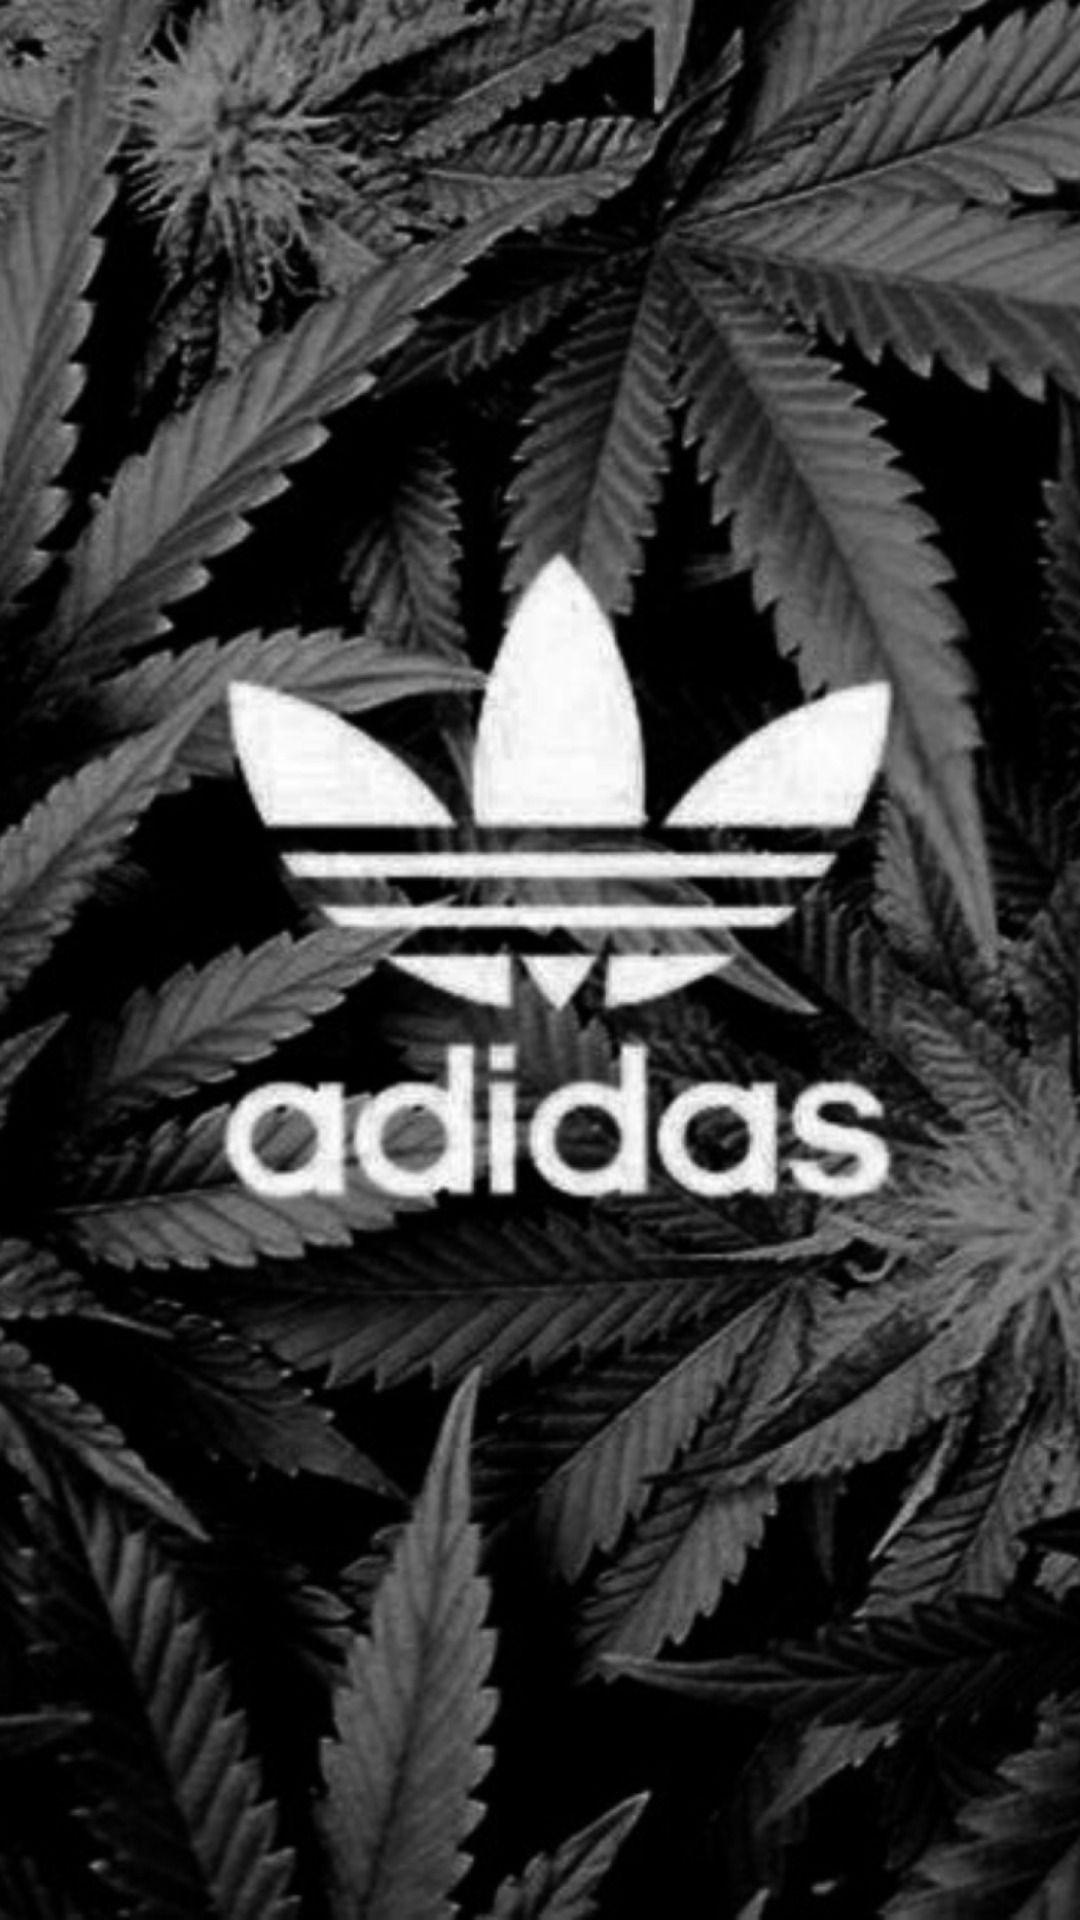 Adidas Weed Wallpaper Hd